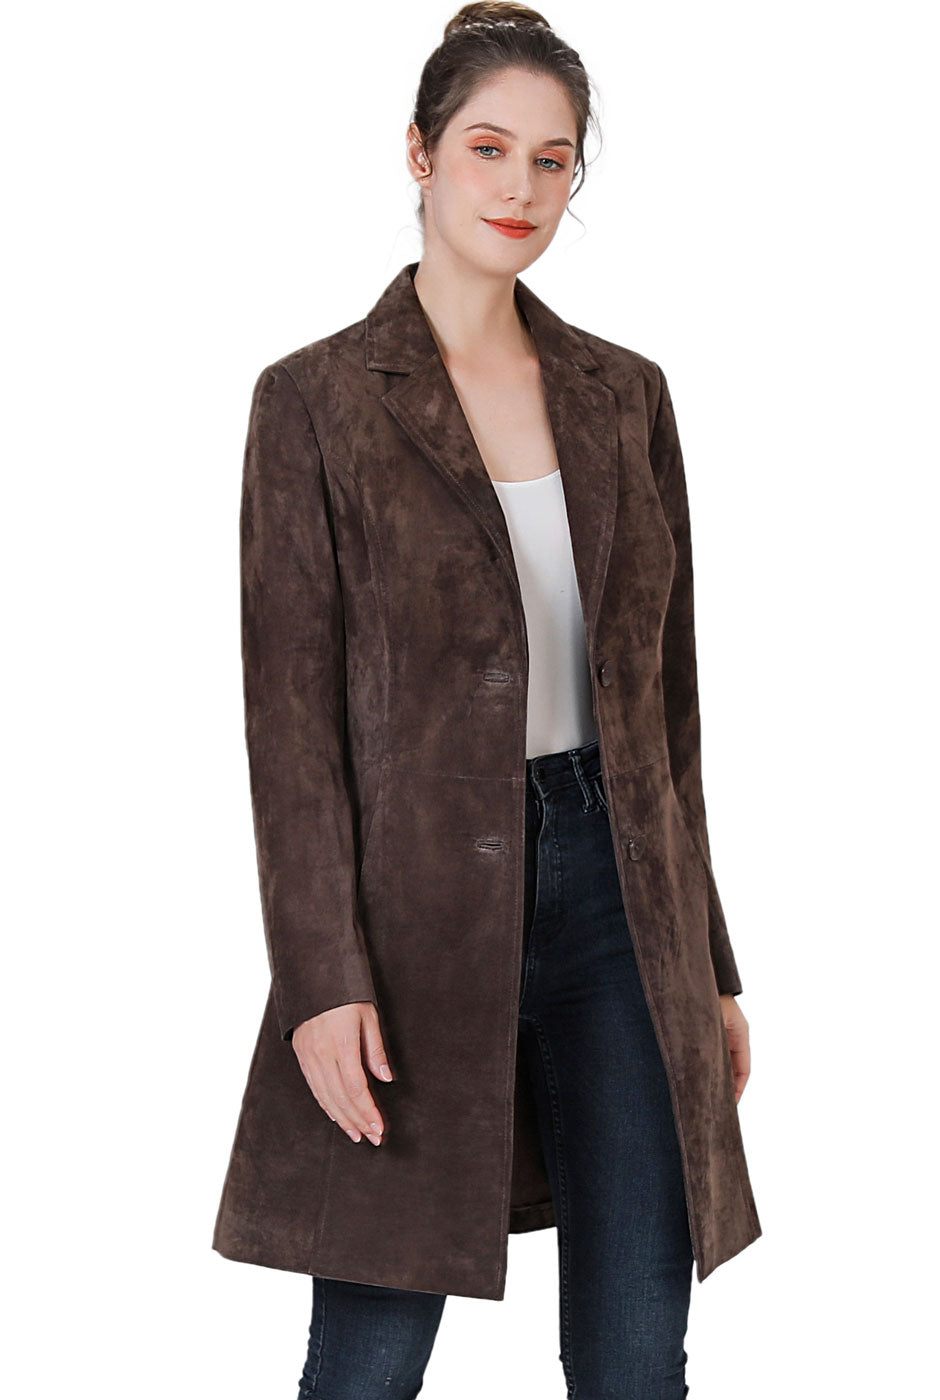 BGSD Women Mary Suede Leather Walker Coat